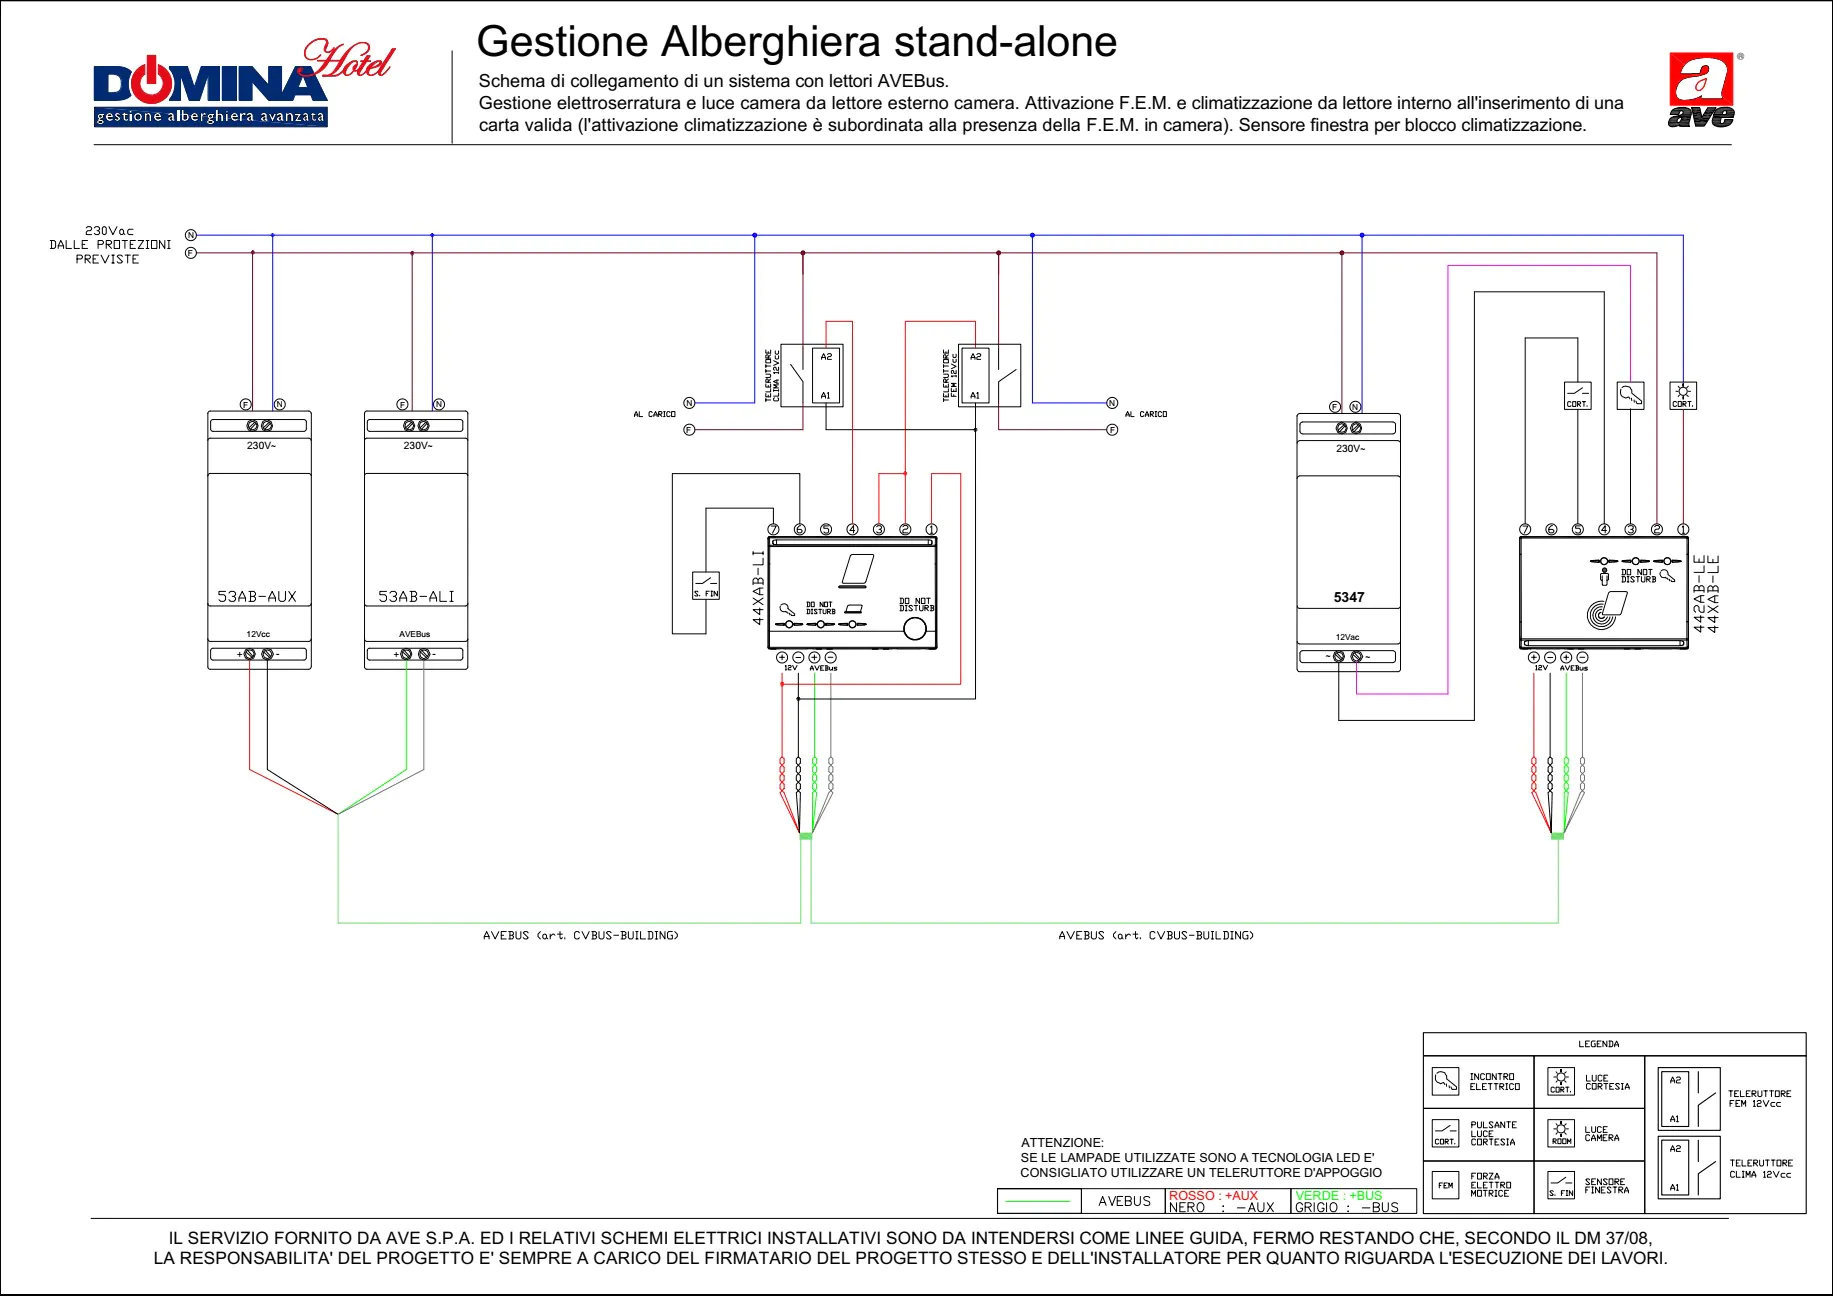 Gestione Alberghiera stand-alone